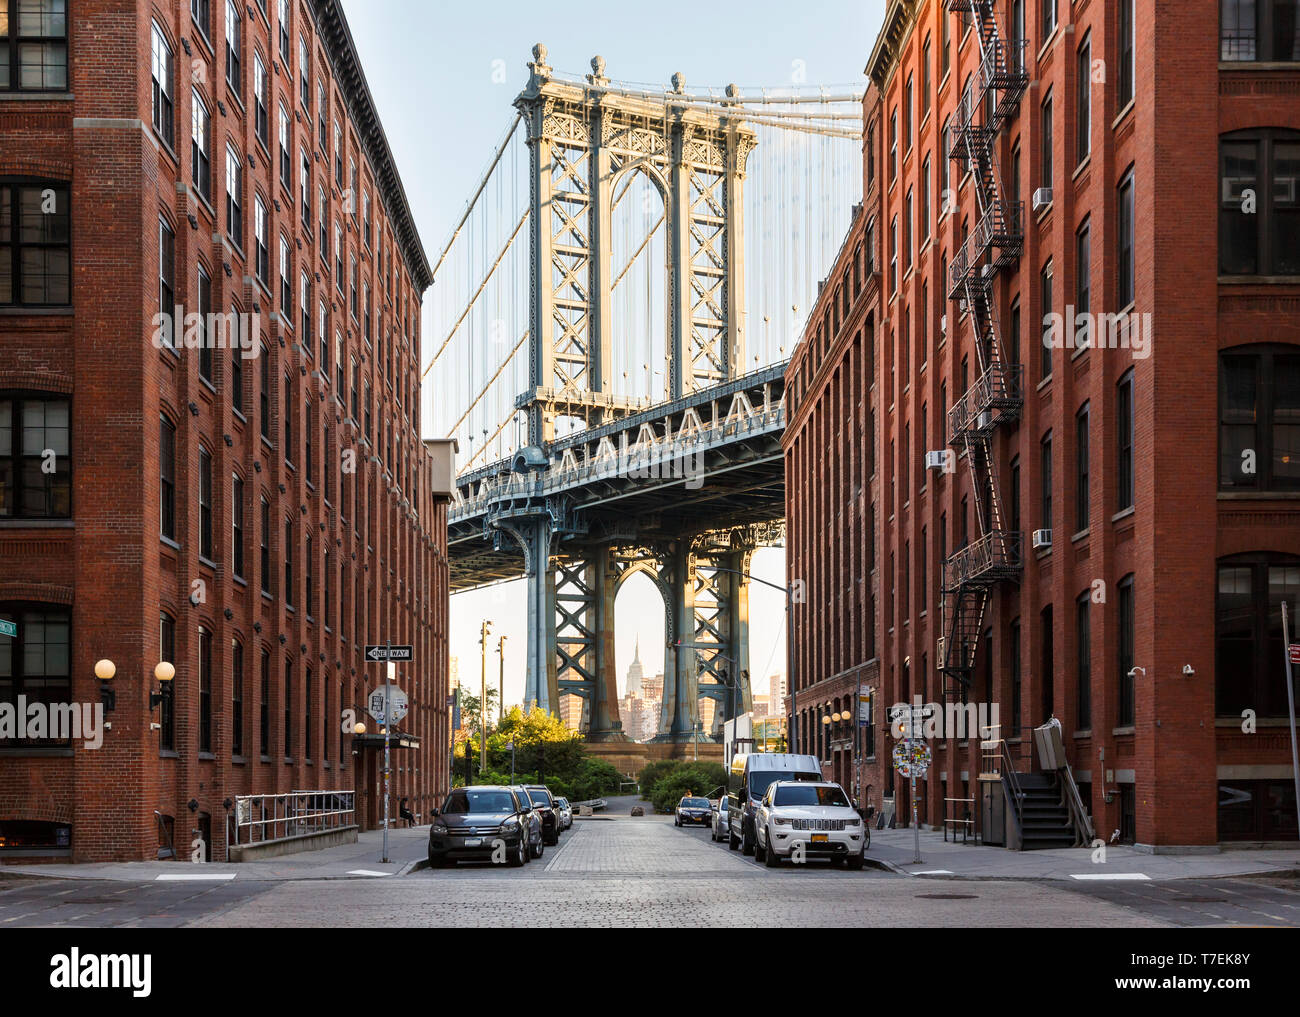 Brooklyn, NY historic DUMBO neighborhood street scene with view of Manhattan Bridge and Empire State Builiding Stock Photo